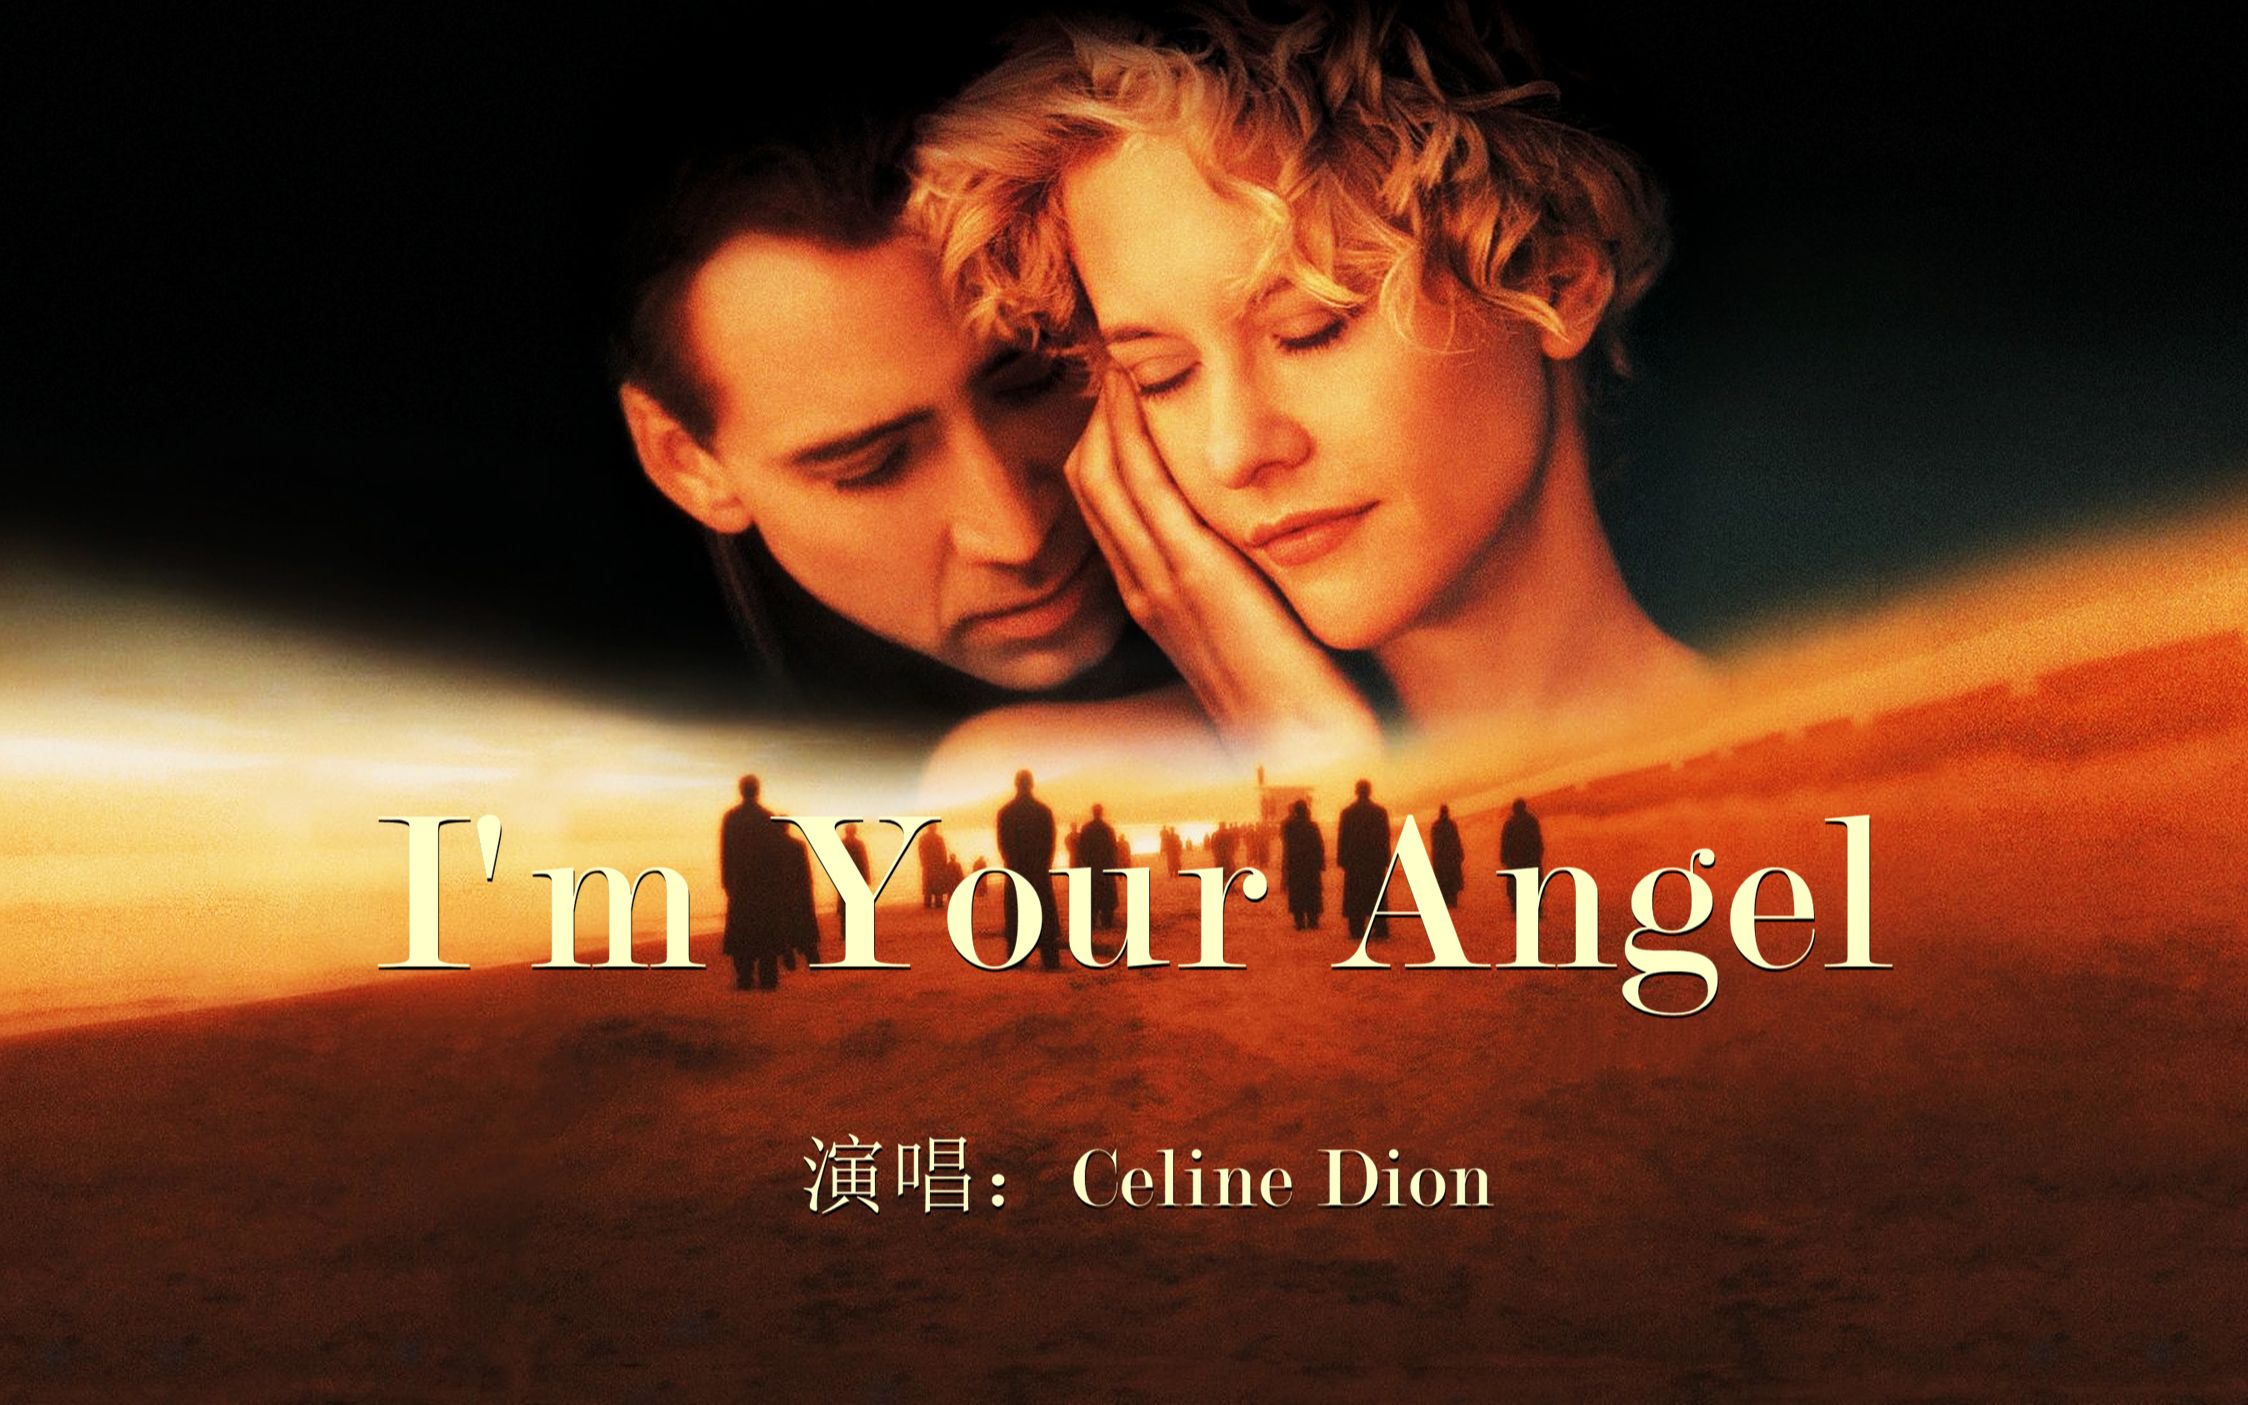 4K超清 首次公布- 席琳迪翁 我心永恒 25周年纪念官方版 Celine Dion My Heart Will Go On-Jun2ai-默认收藏夹-哔哩哔哩视频